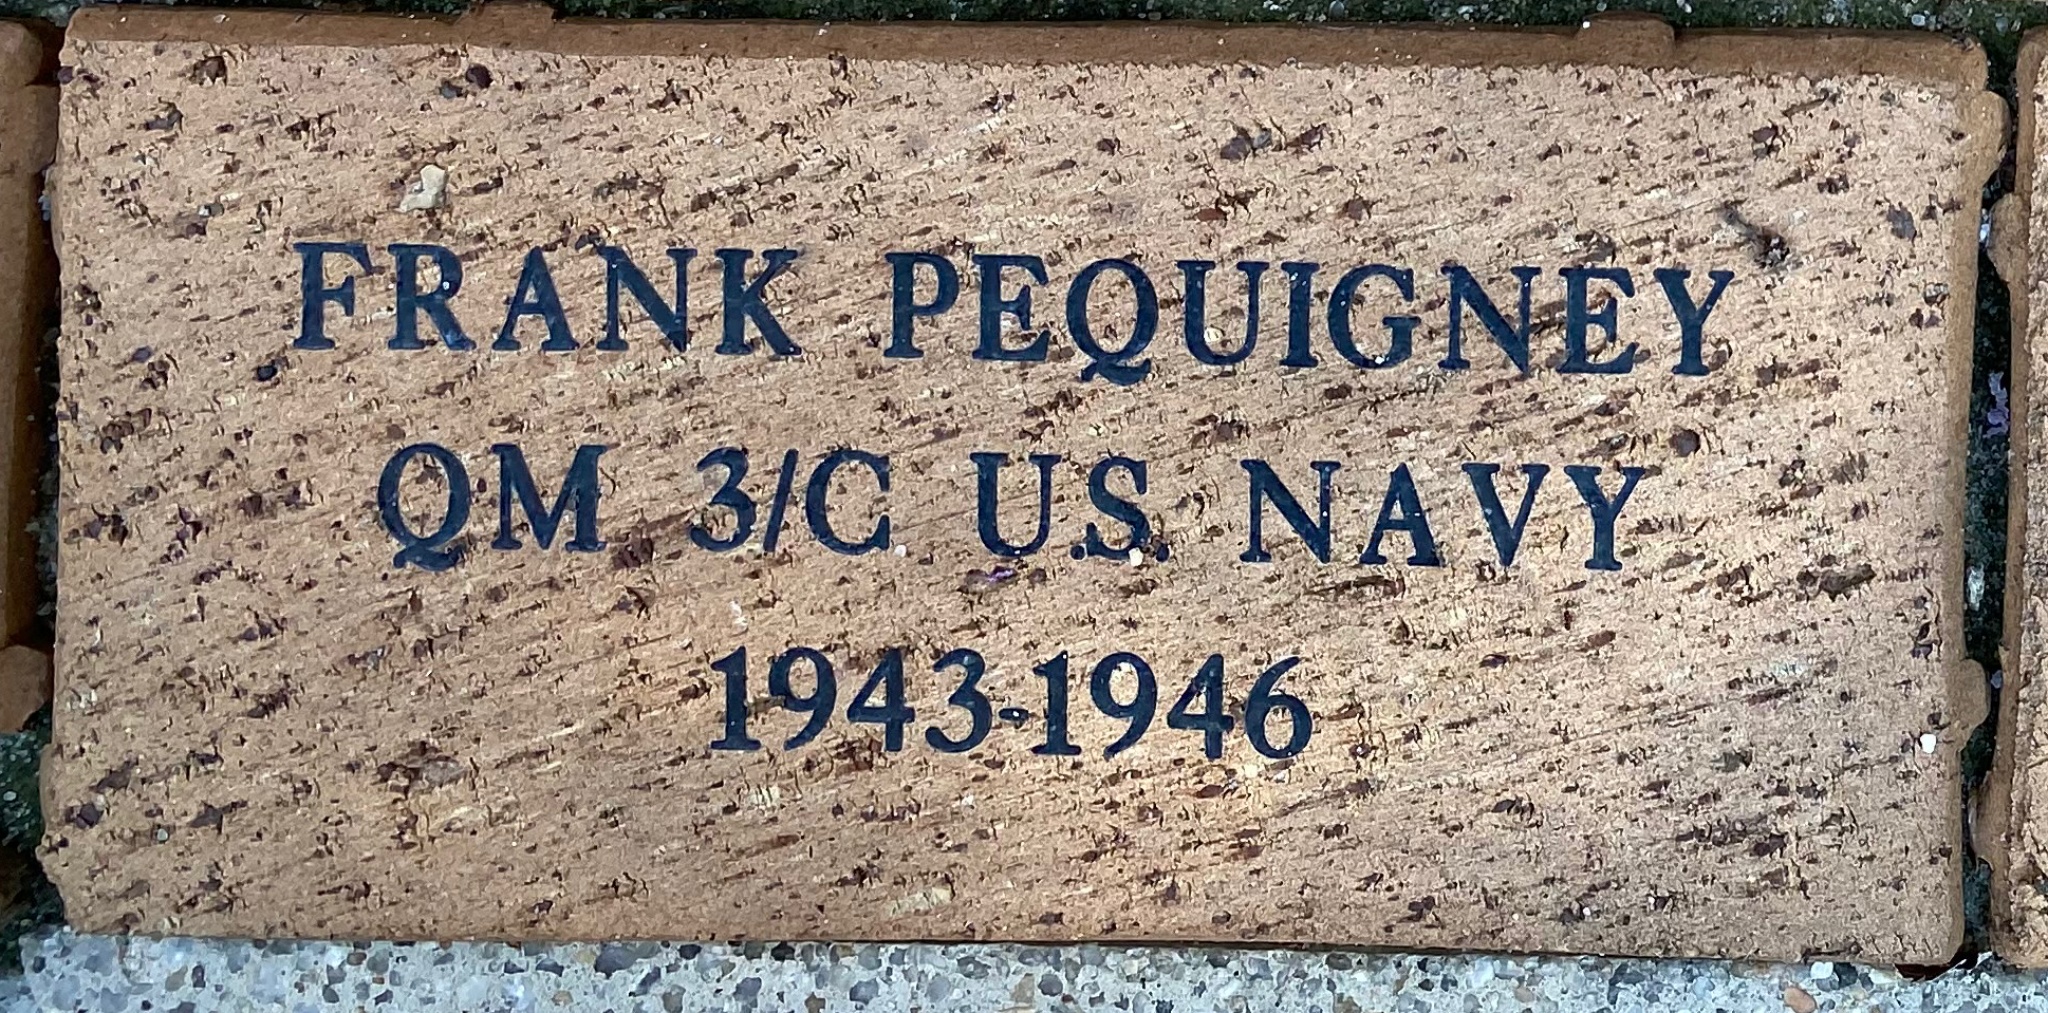 FRANK PEQUIGNEY QM 3/C U.S. NAVY 1943 -1946